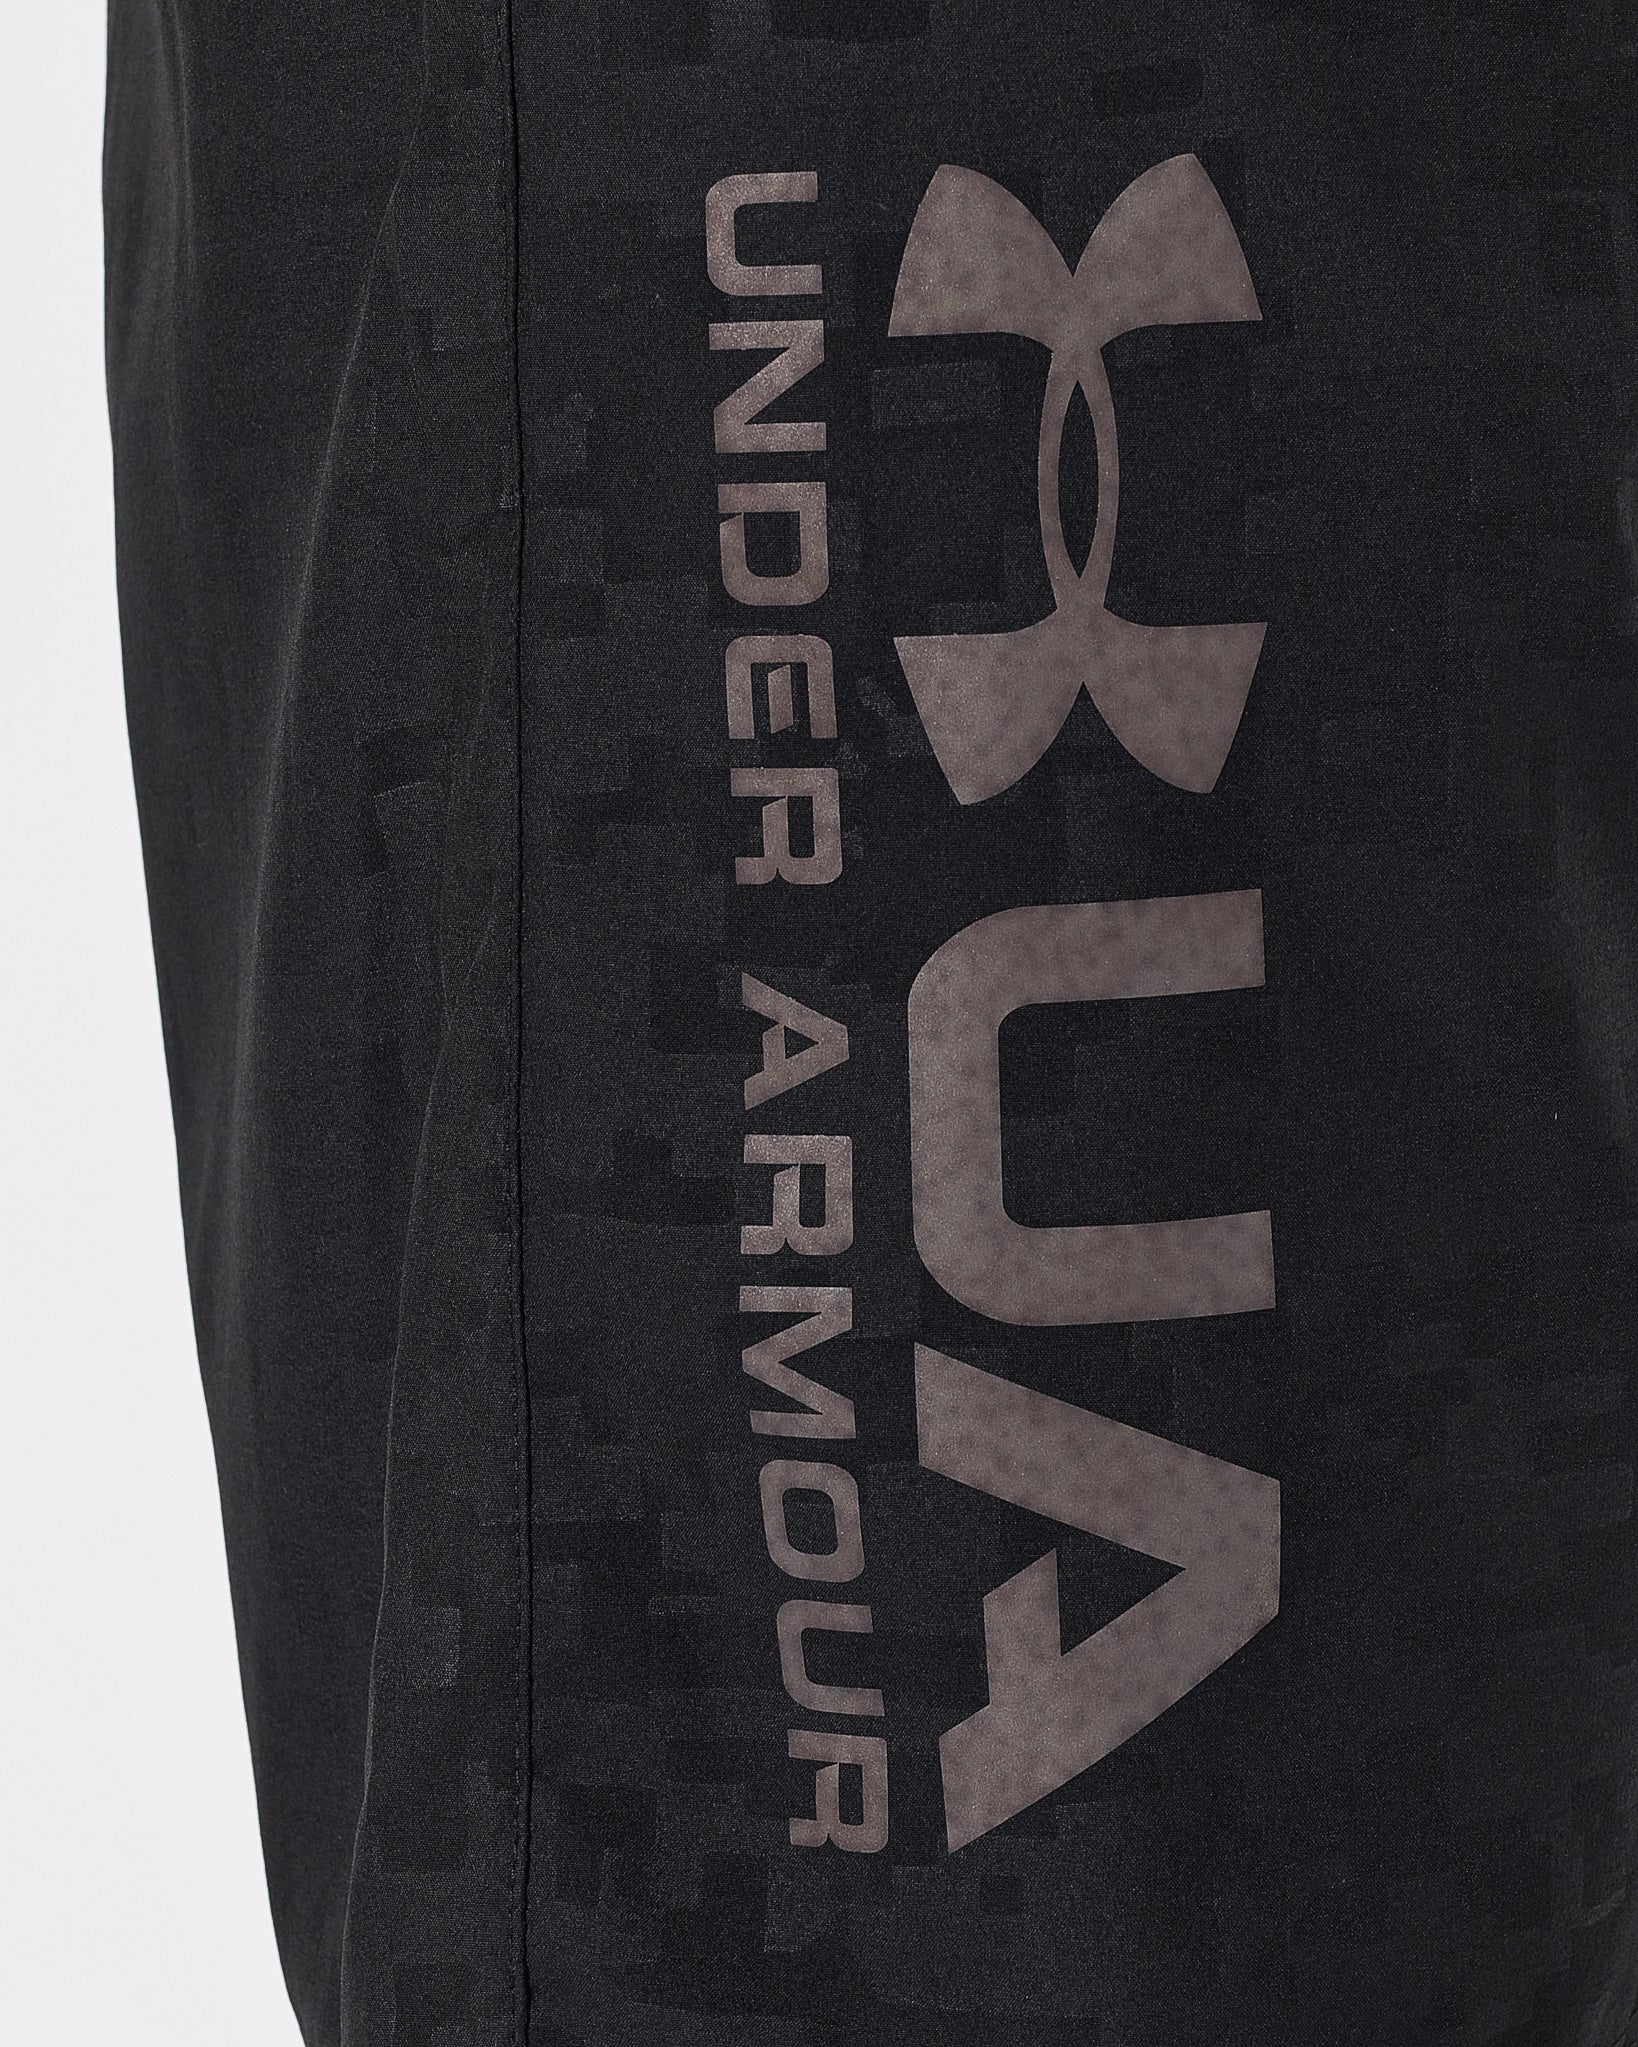 UA Logo Vertical Printed Men Black Track Shorts 12.90